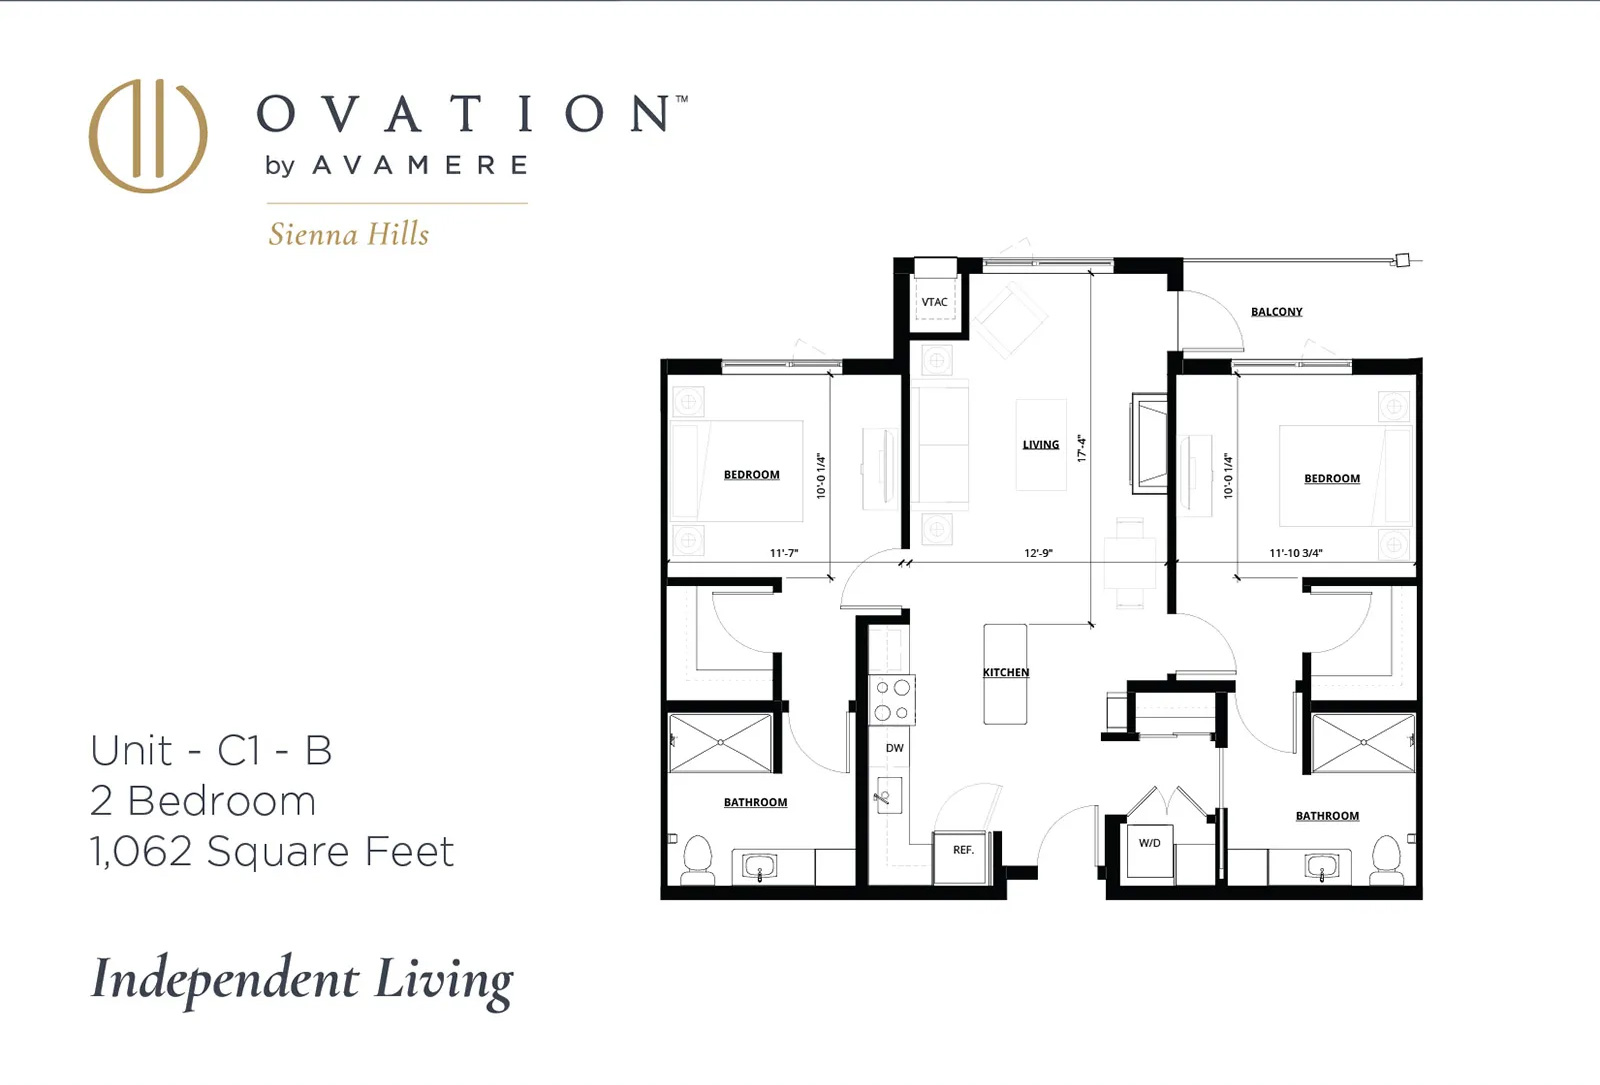 Ovation Sienna Hills Independent Living Floorplan 2 Bedroom 1062 sq ft